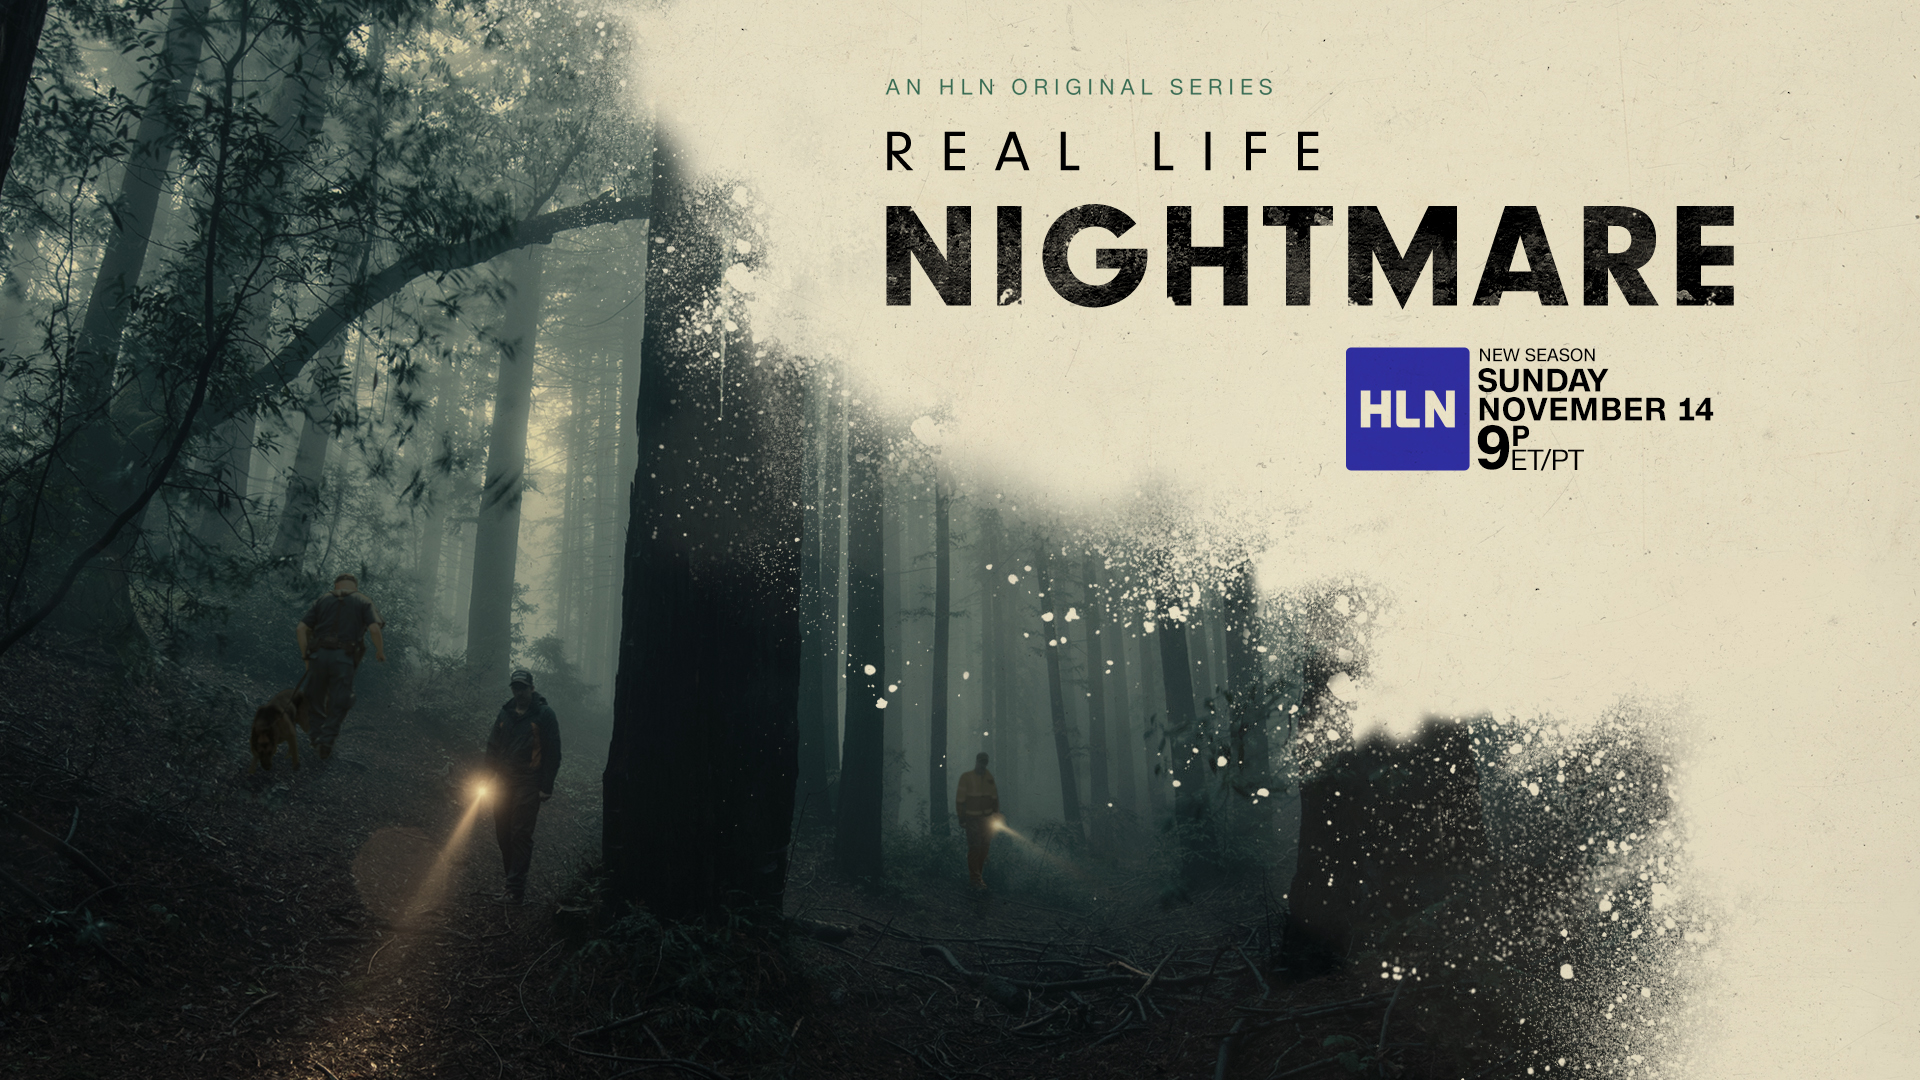 REAL LIFE NIGHTMARE – SEASON 3 OF THE HLN SERIES PREMIERES NOVEMBER 14